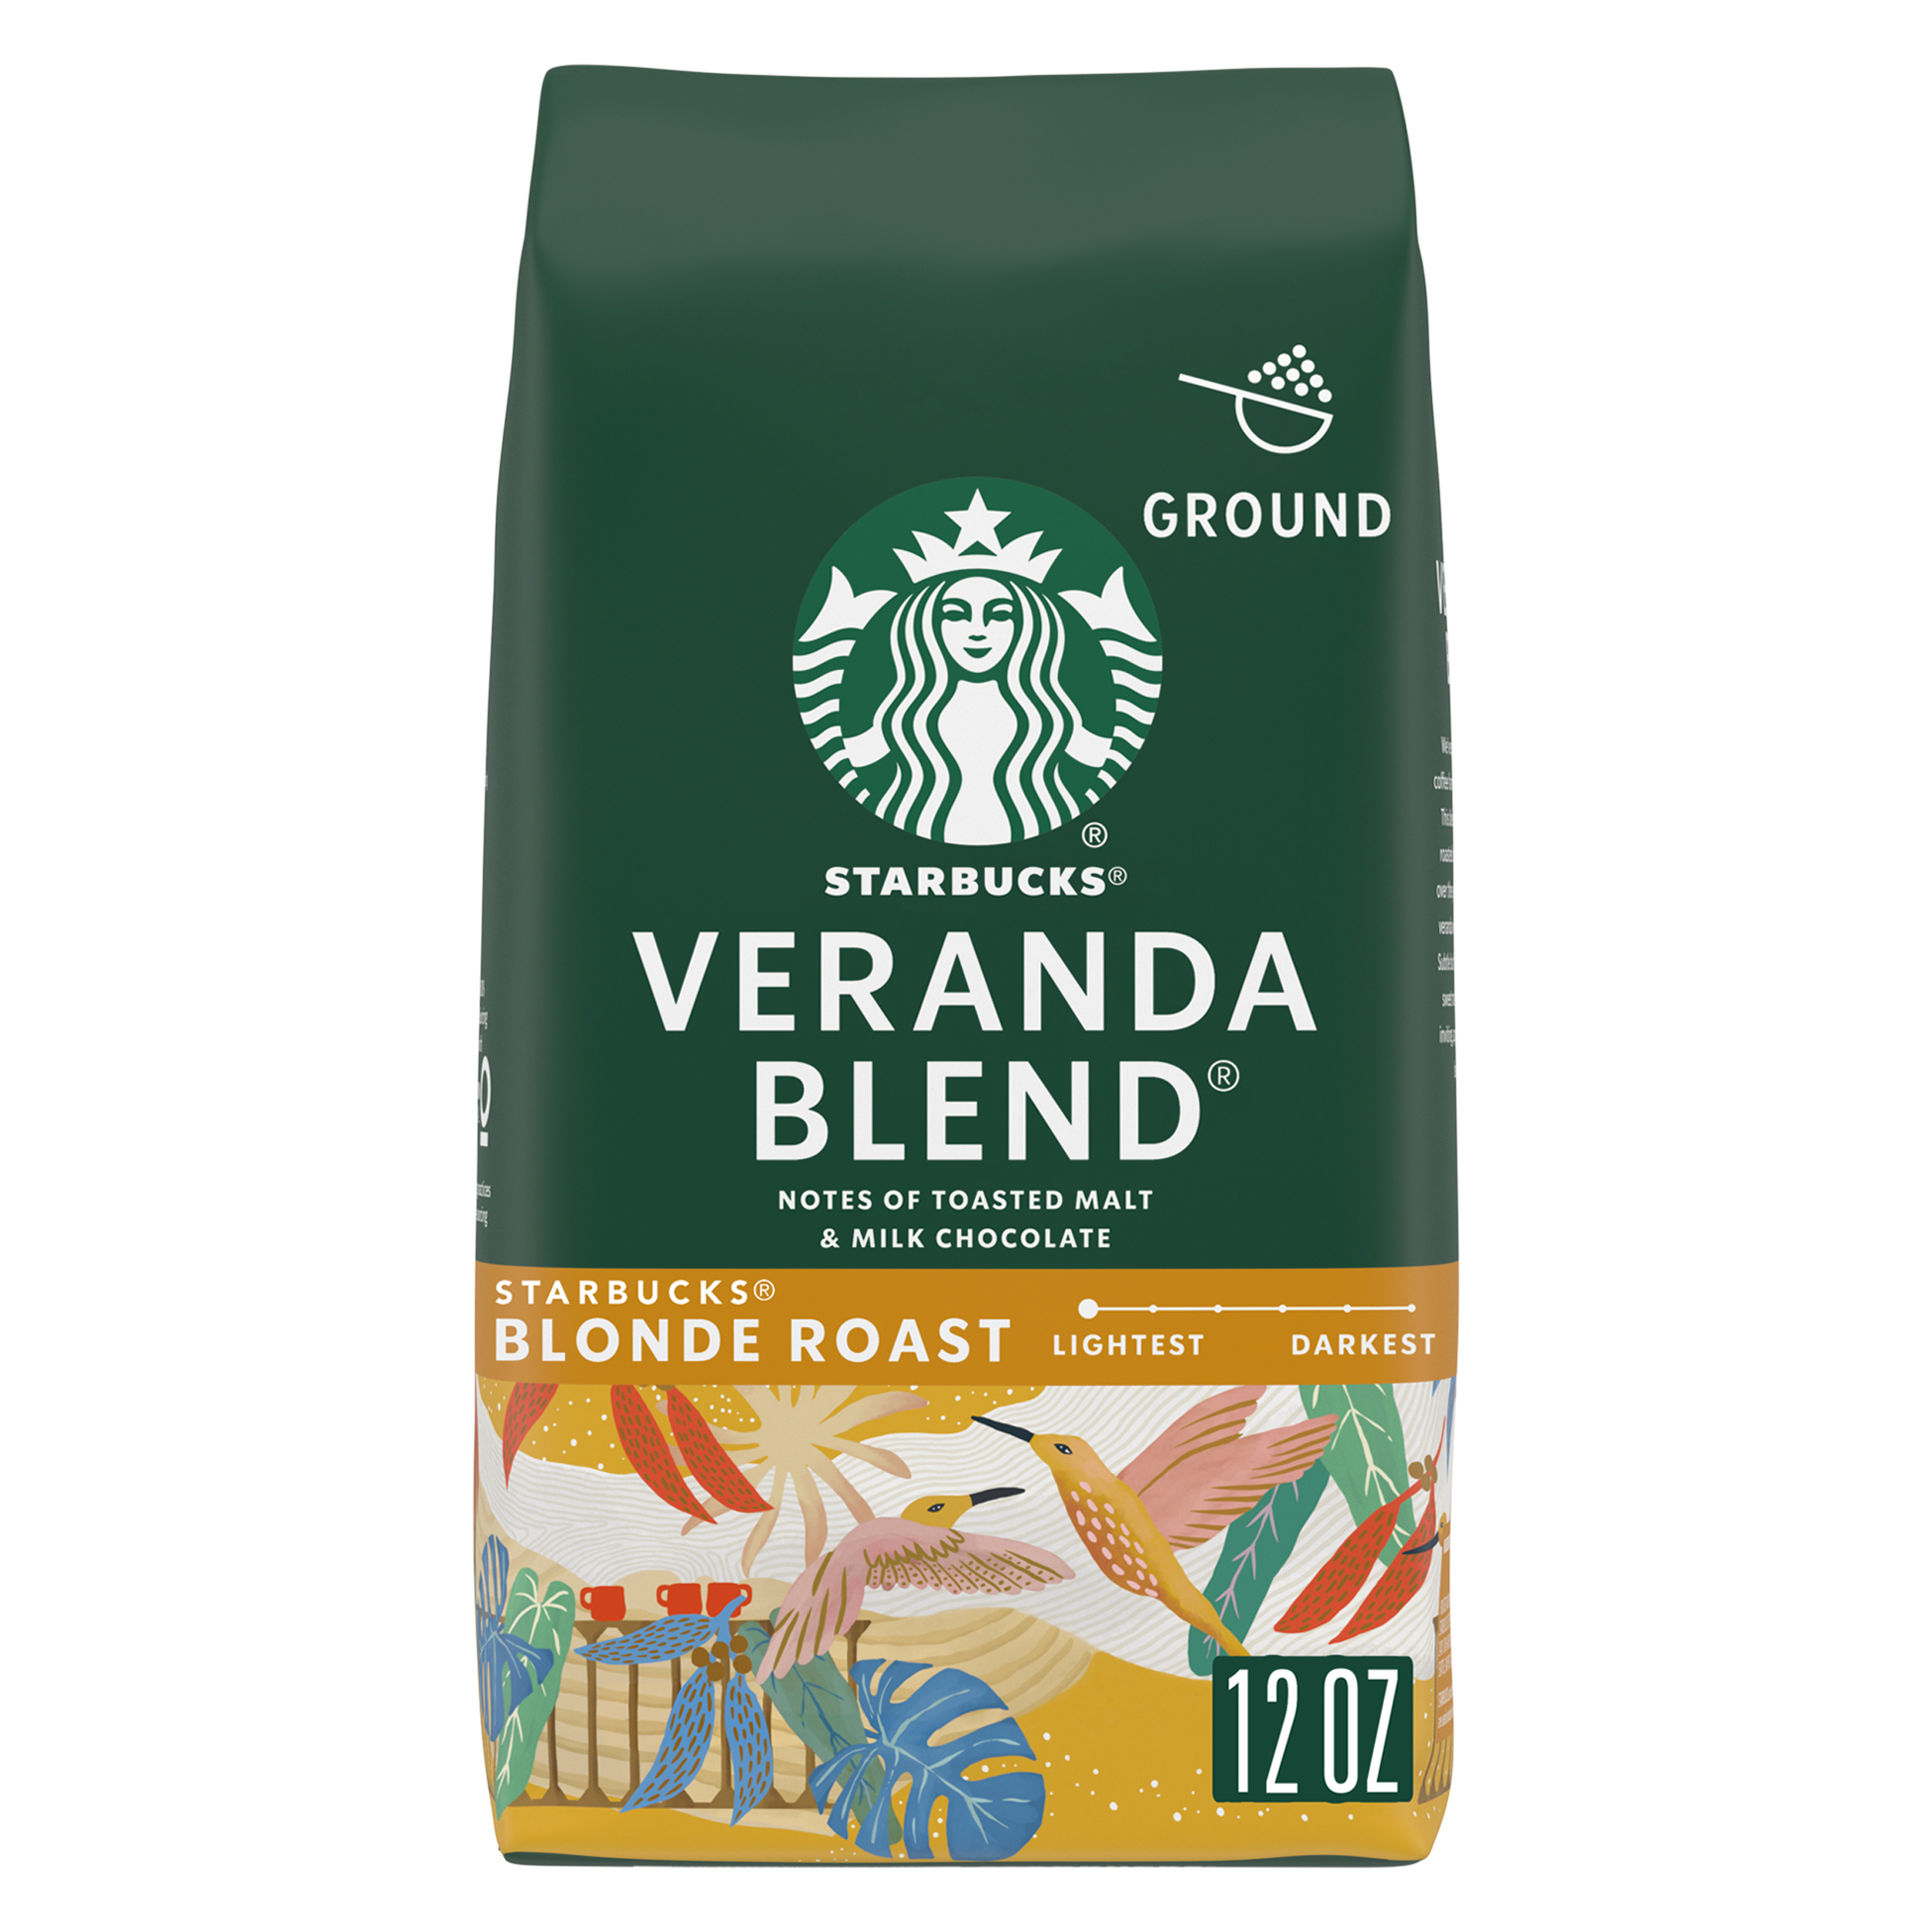 Starbucks Veranda Blend, Starbucks Blonde Roast Ground Coffee, 100% Arabica, 12 oz - image 1 of 8